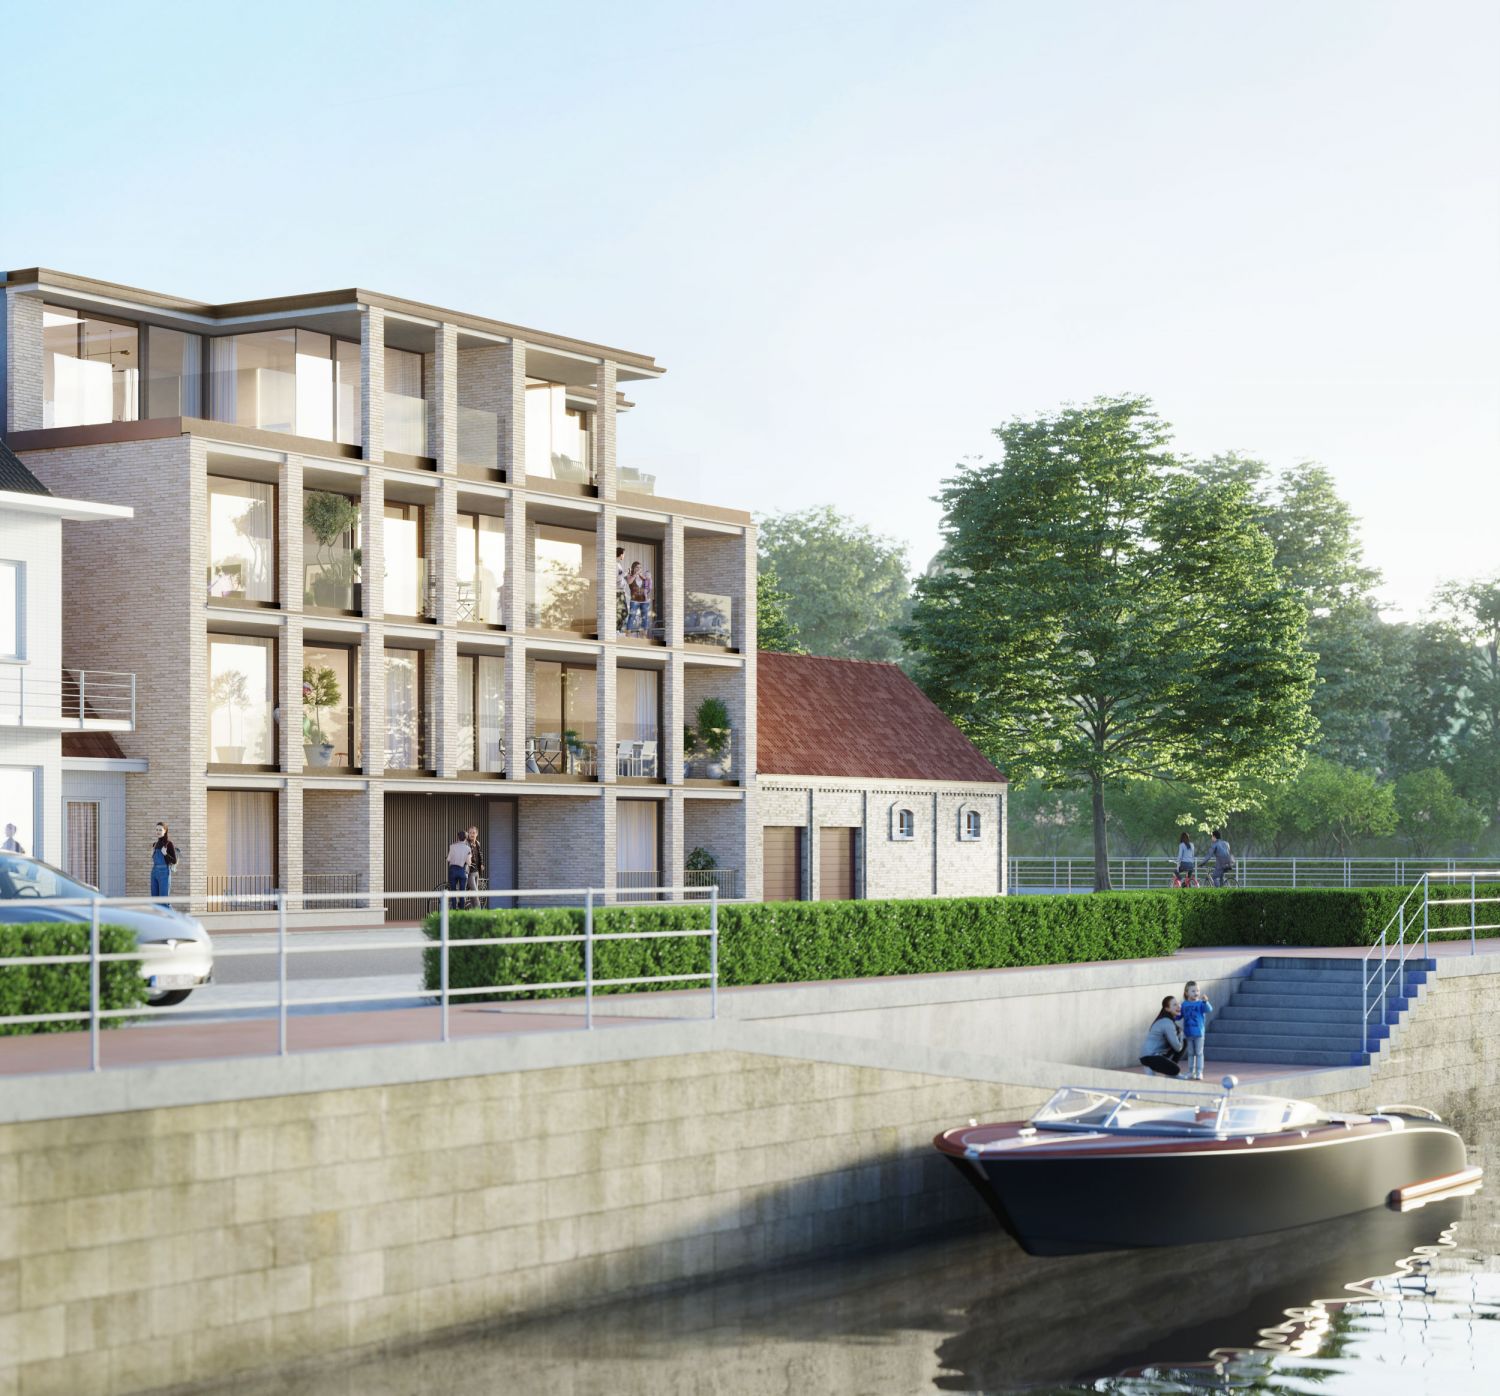 Docks, WOONN, development, Kaaiplaats, Veurne